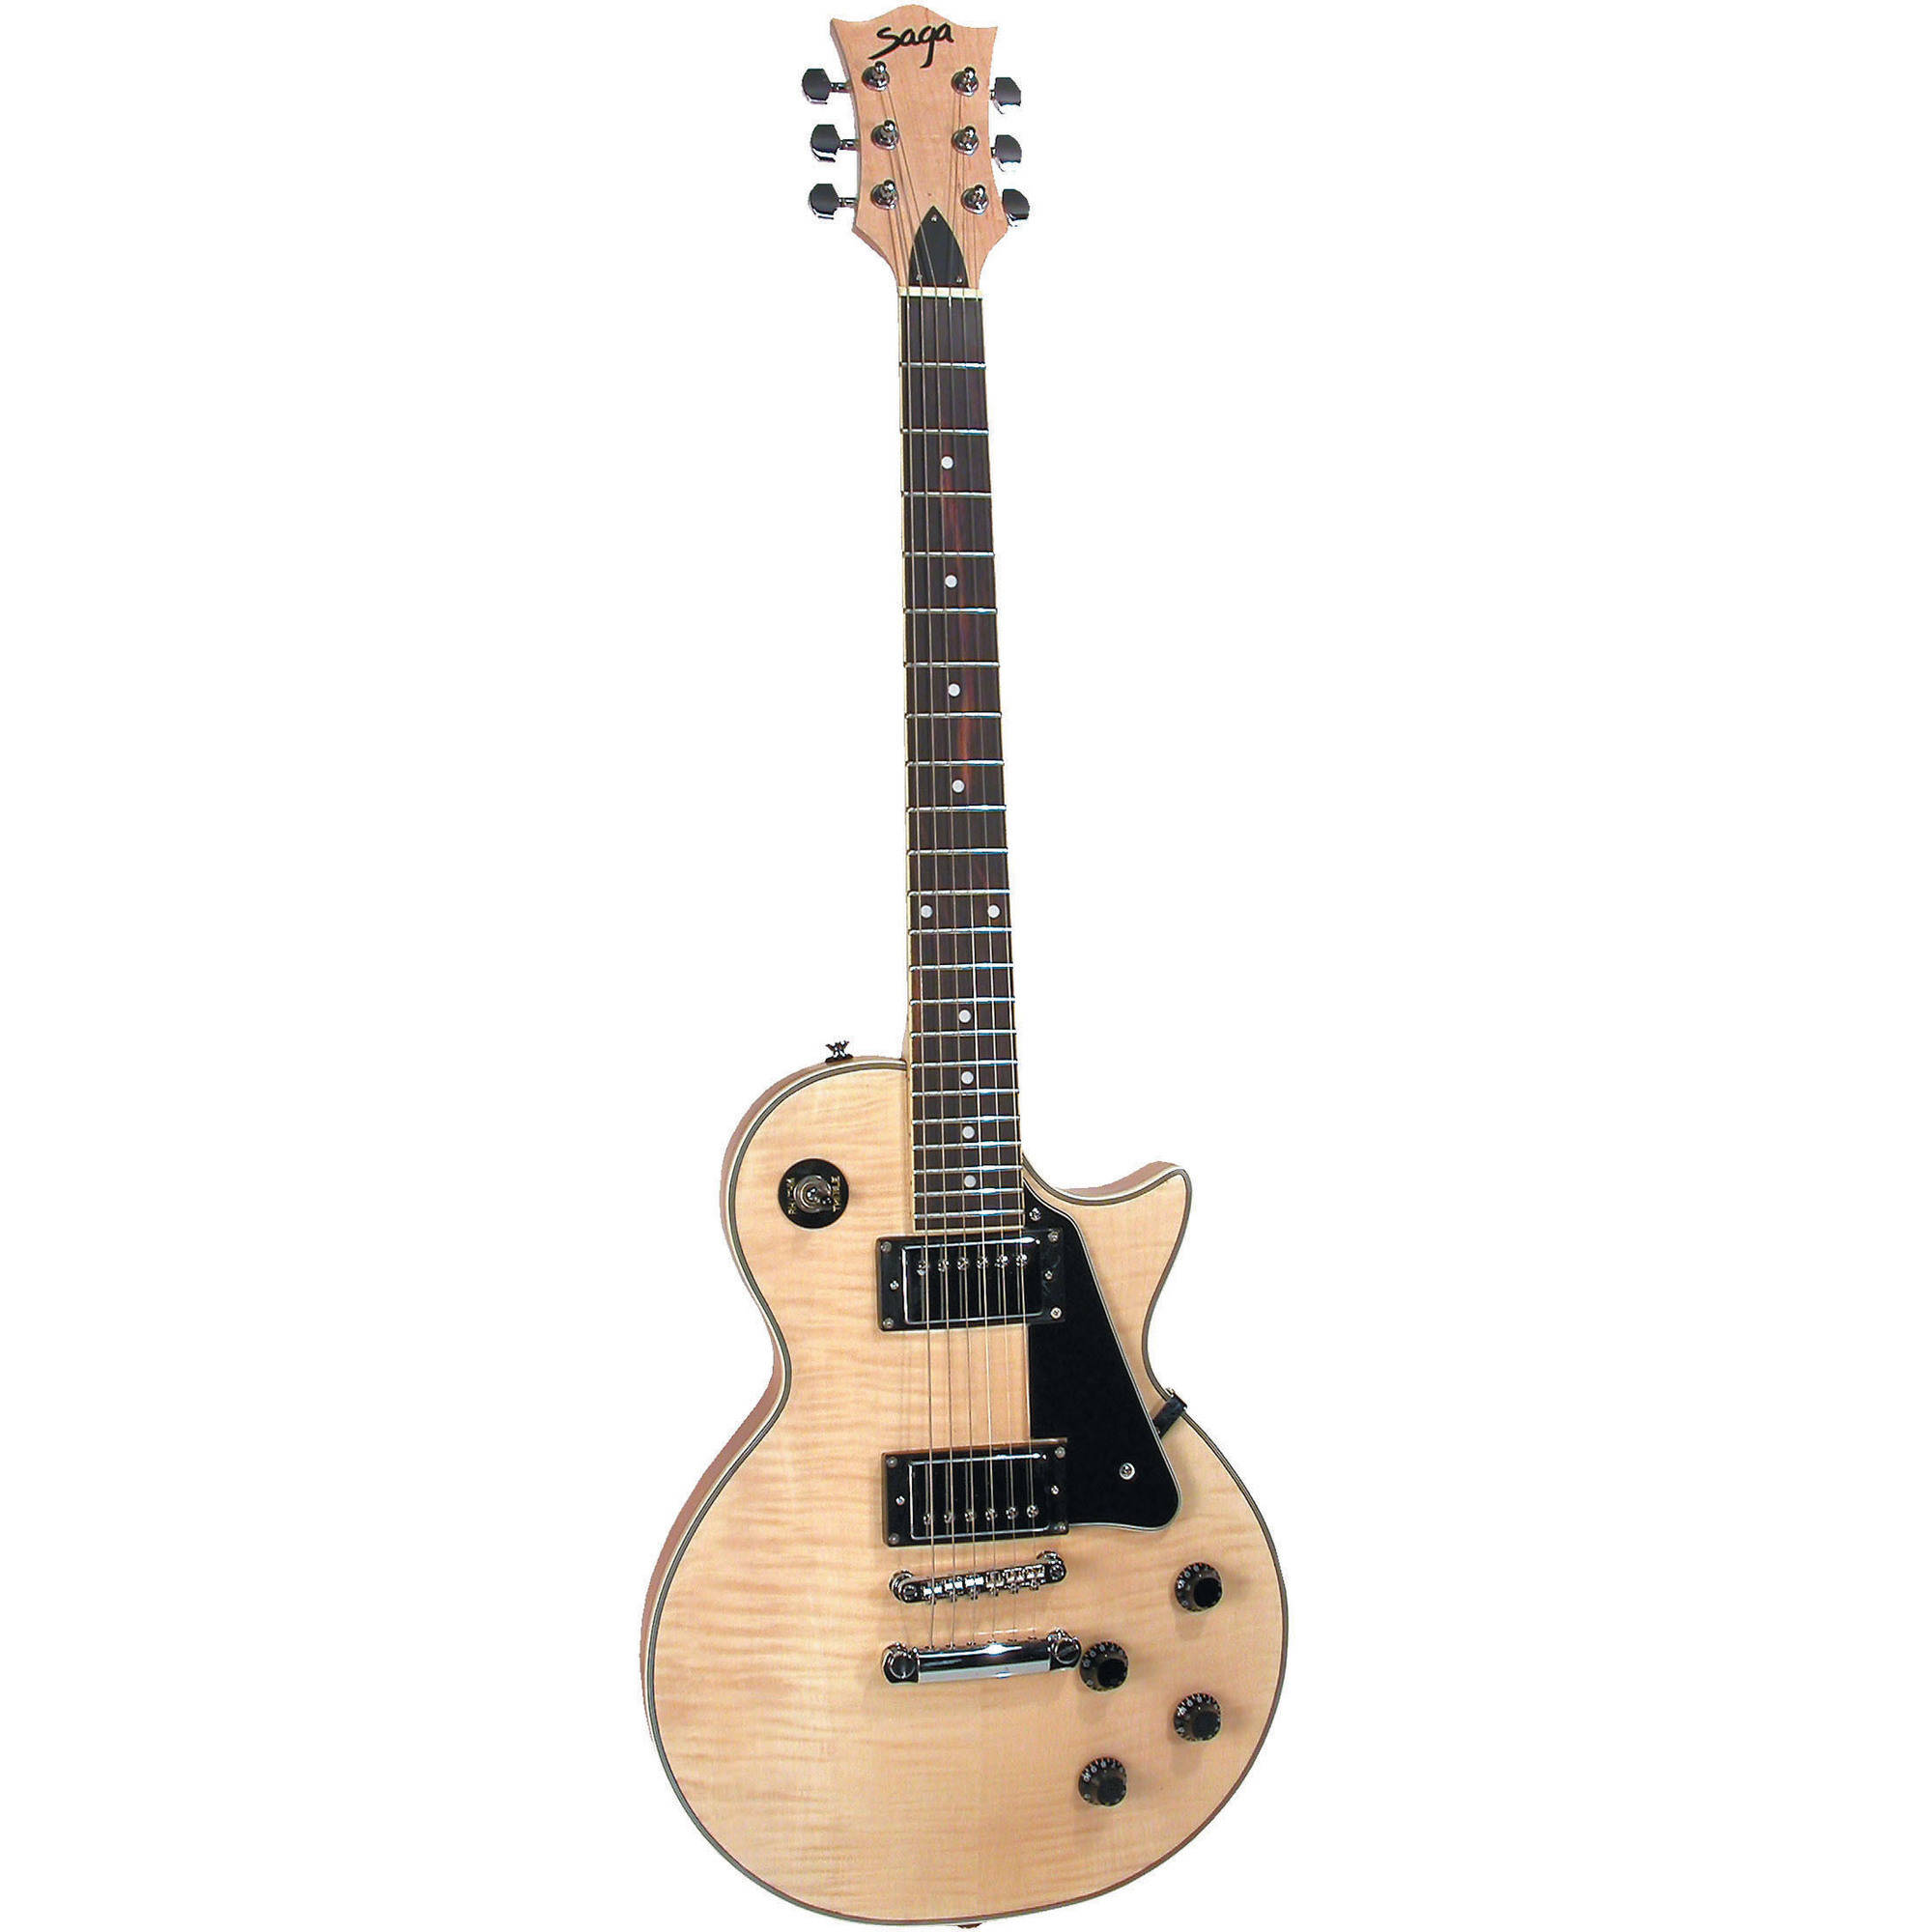 Saga Electric Guitar Kits - image 3 of 3